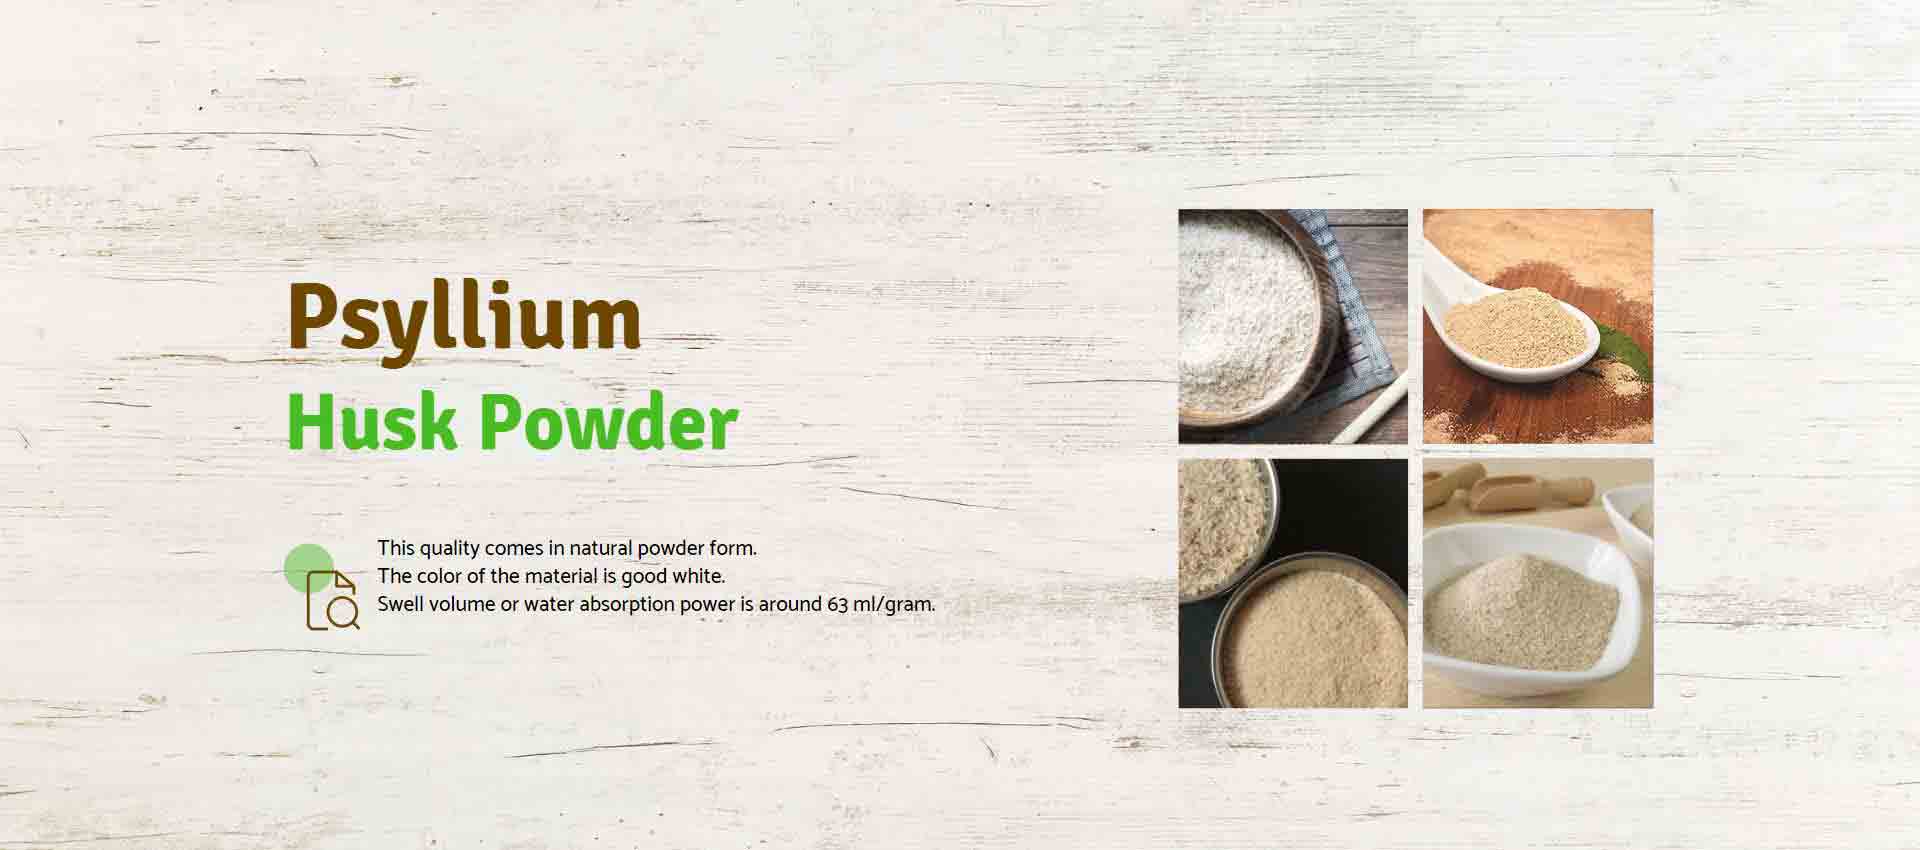 Psyllium Husk Powder Manufacturers in Brazil